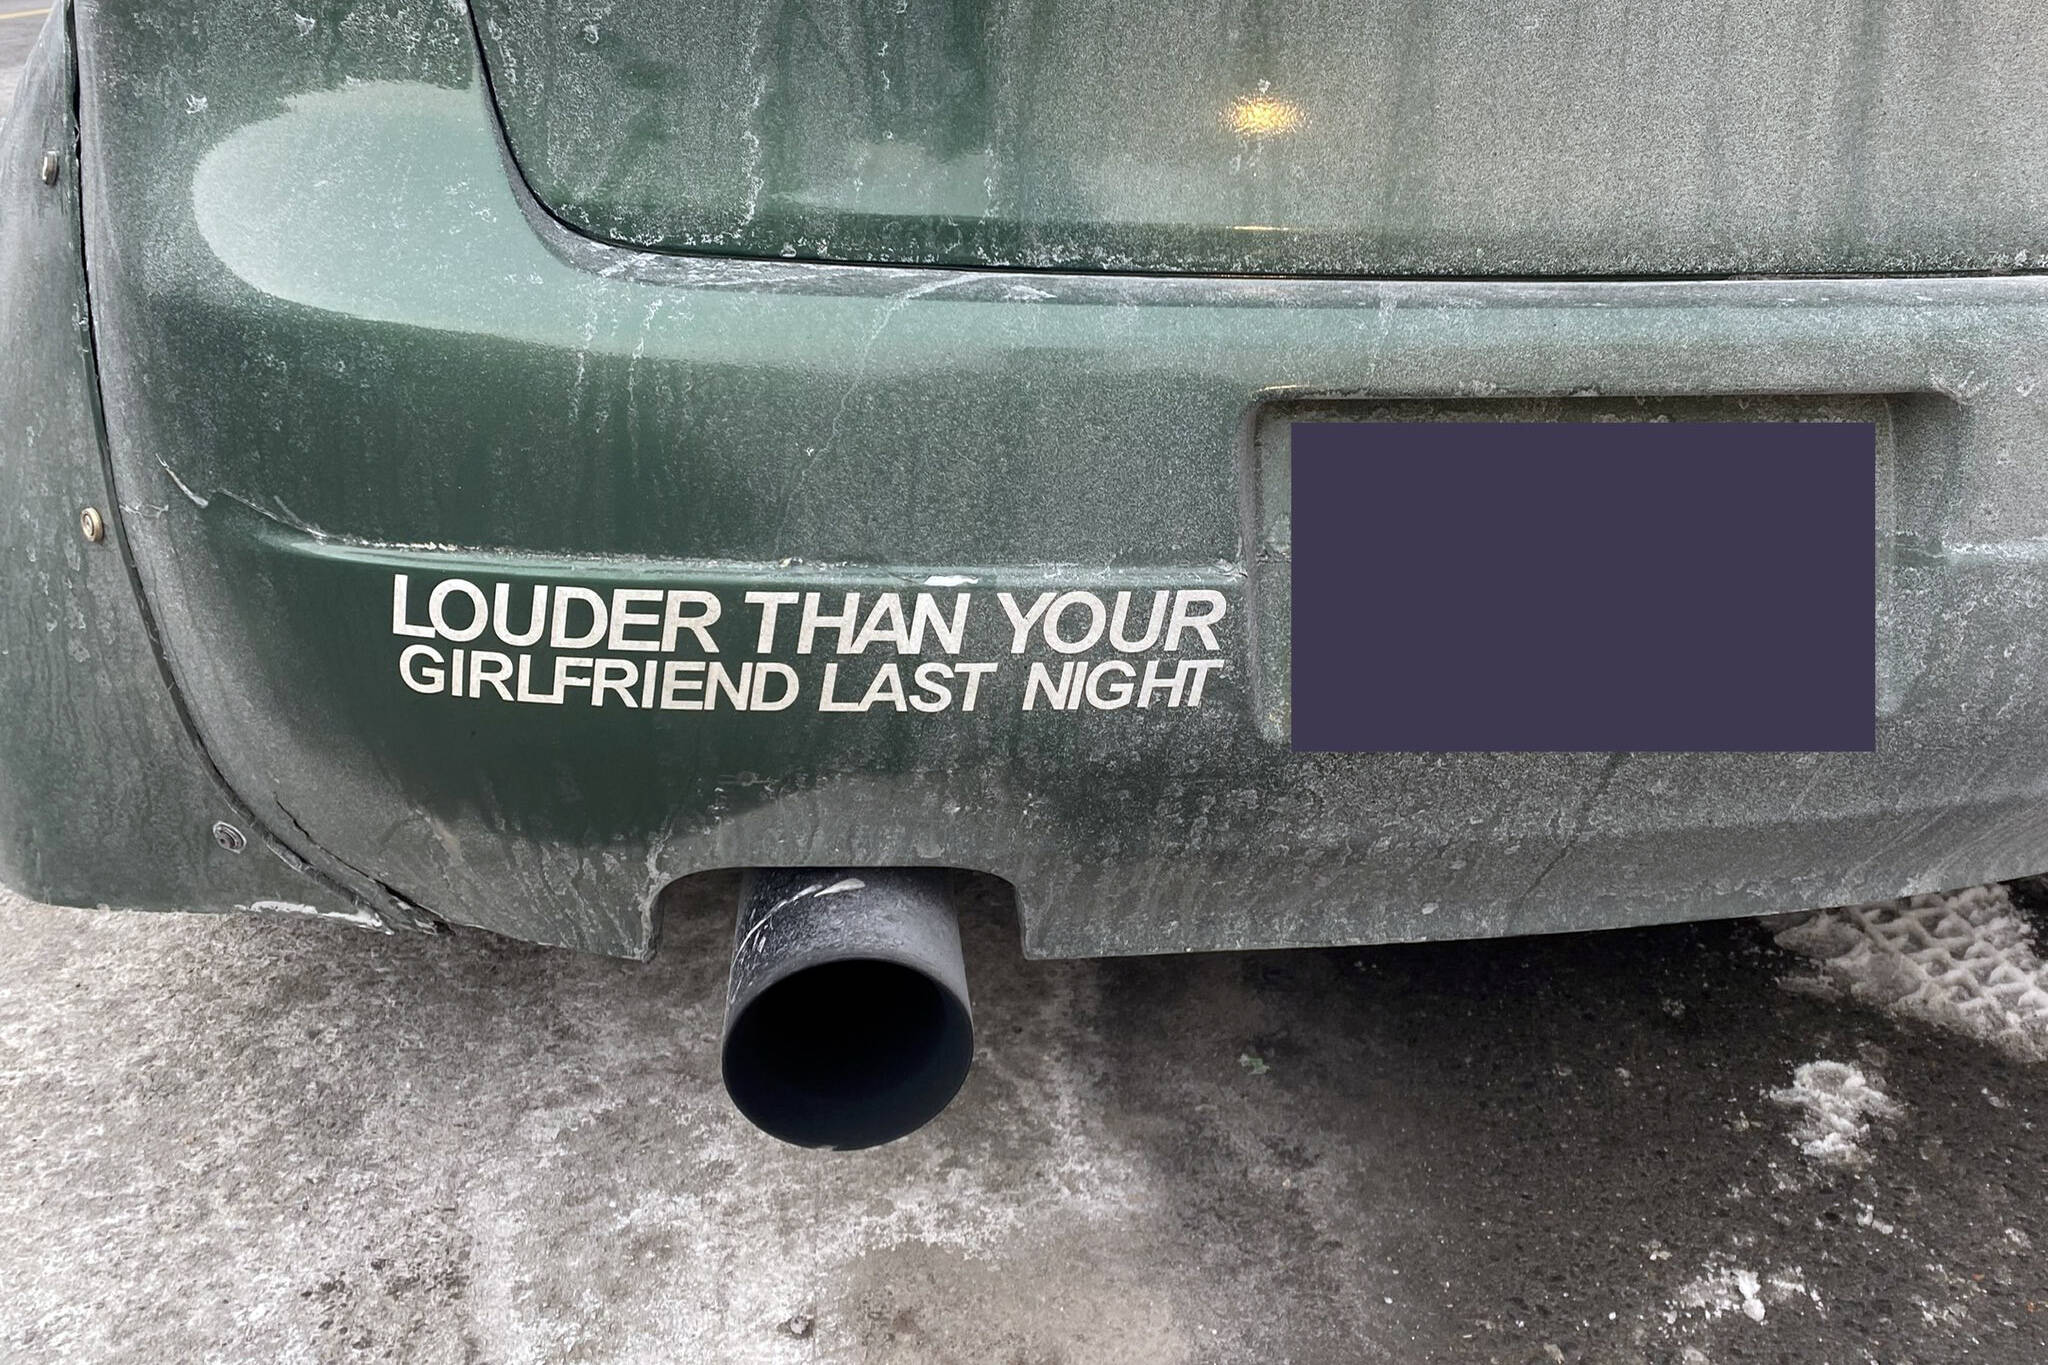 dumb bumper sticker